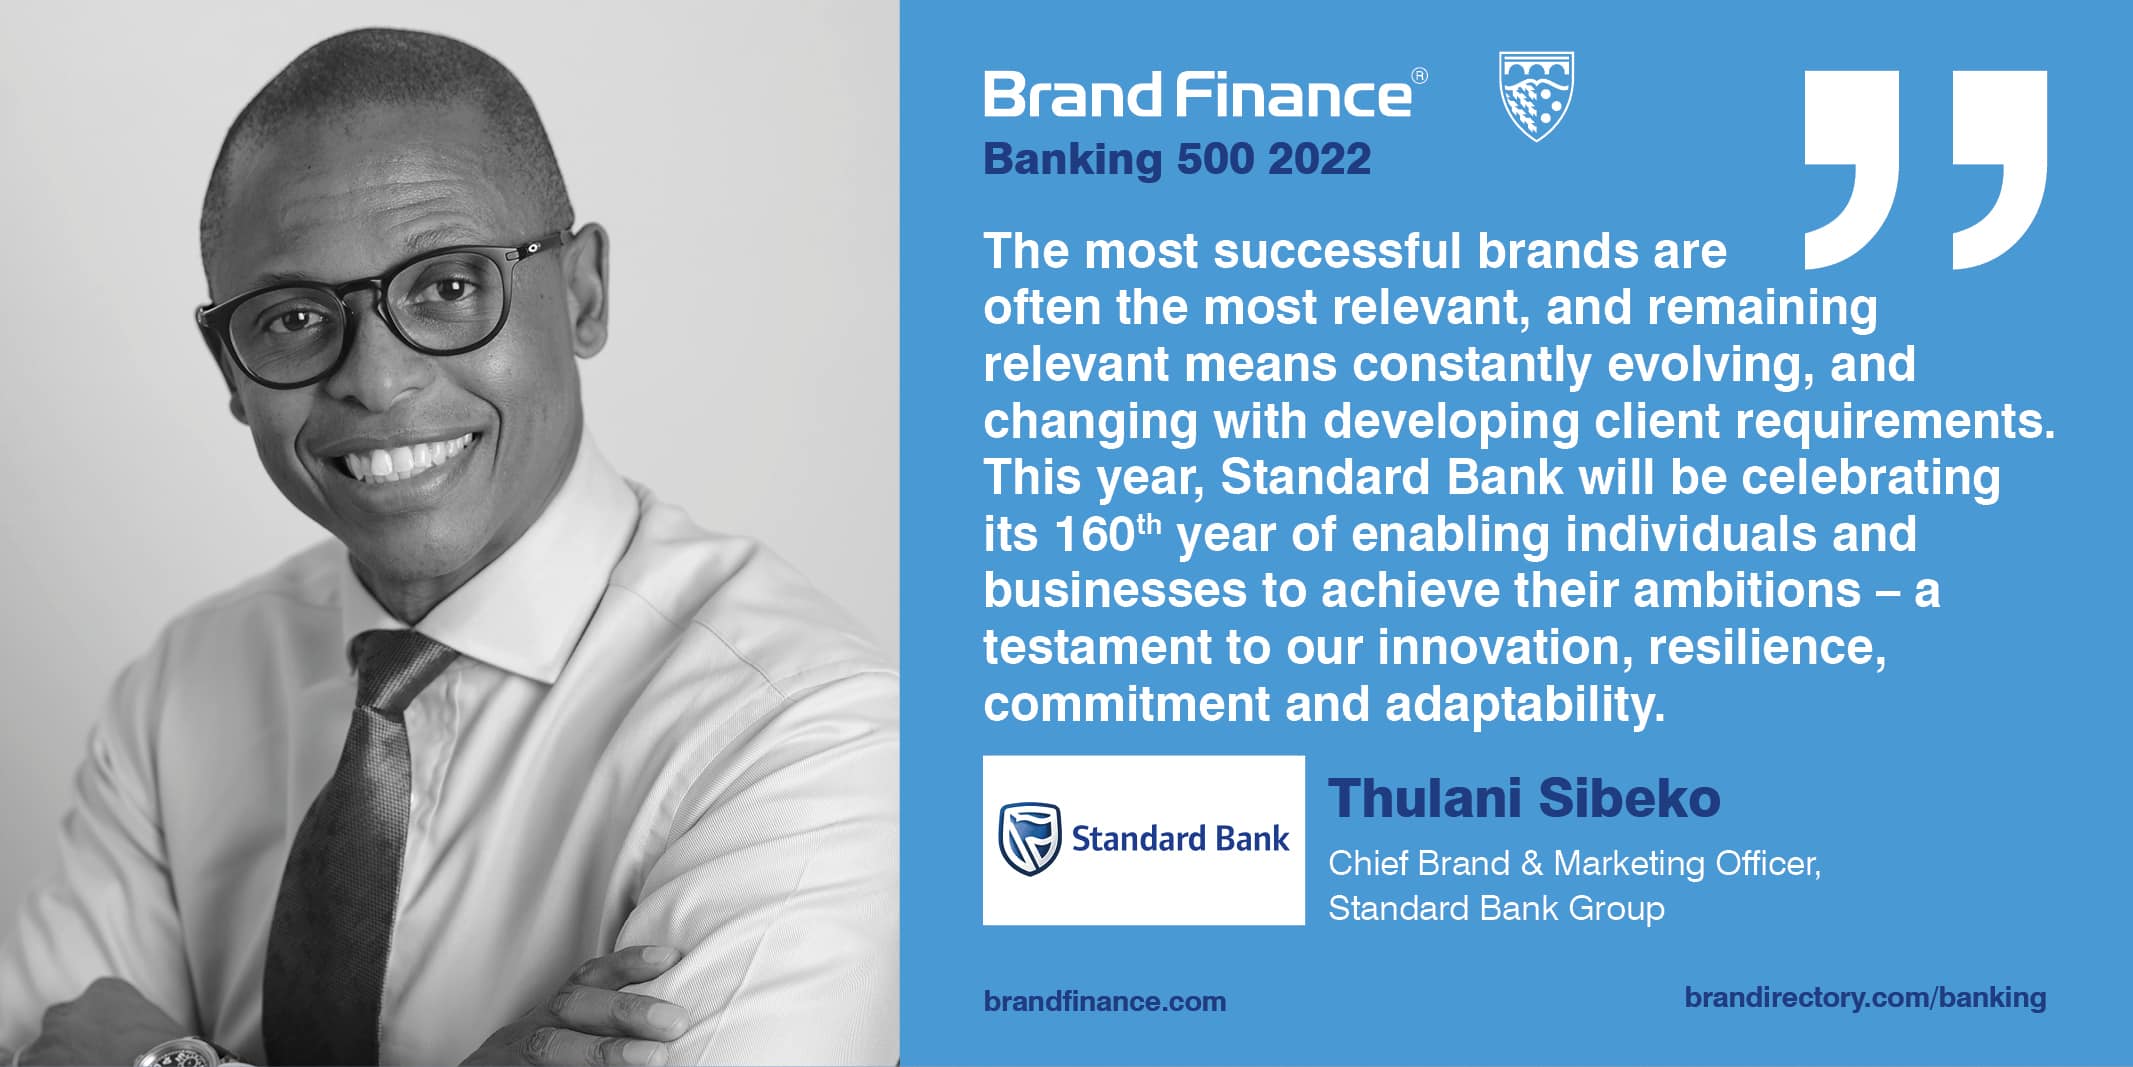 Thulani Sibeko, Chief Brand & Marketing Officer, Standard Bank Group